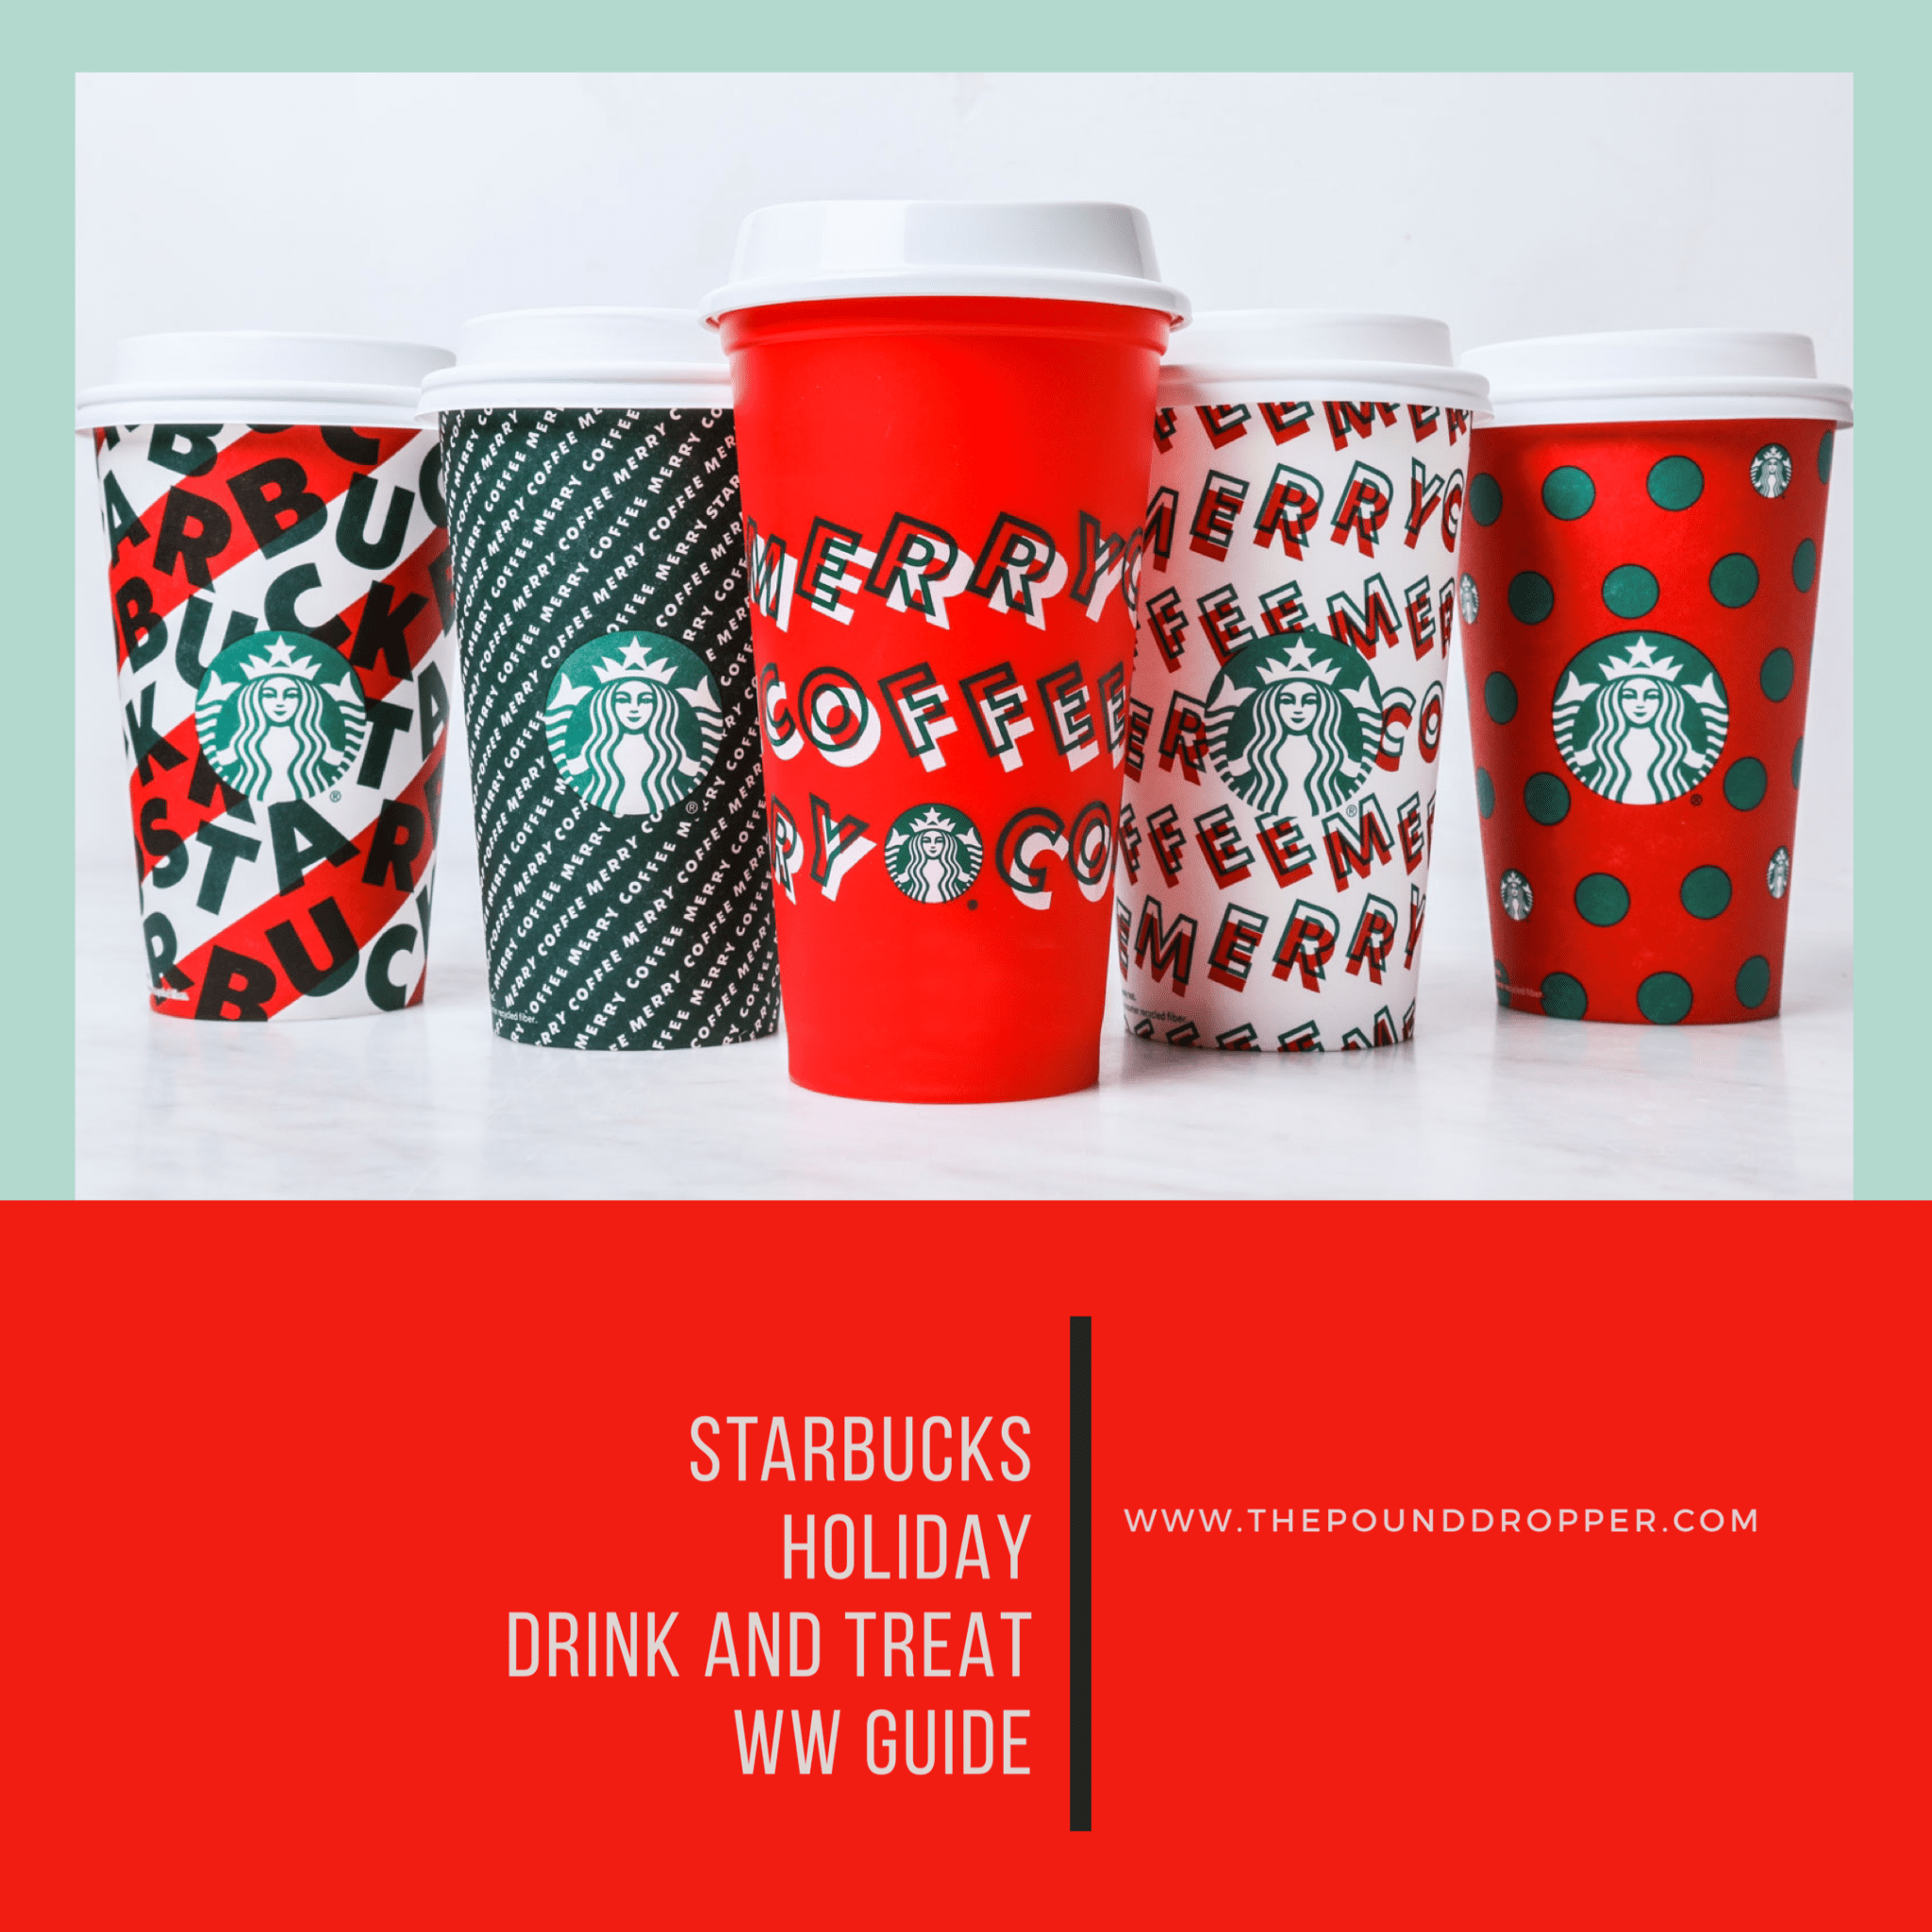 Starbucks holiday cups 2019 are returning Nov. 7